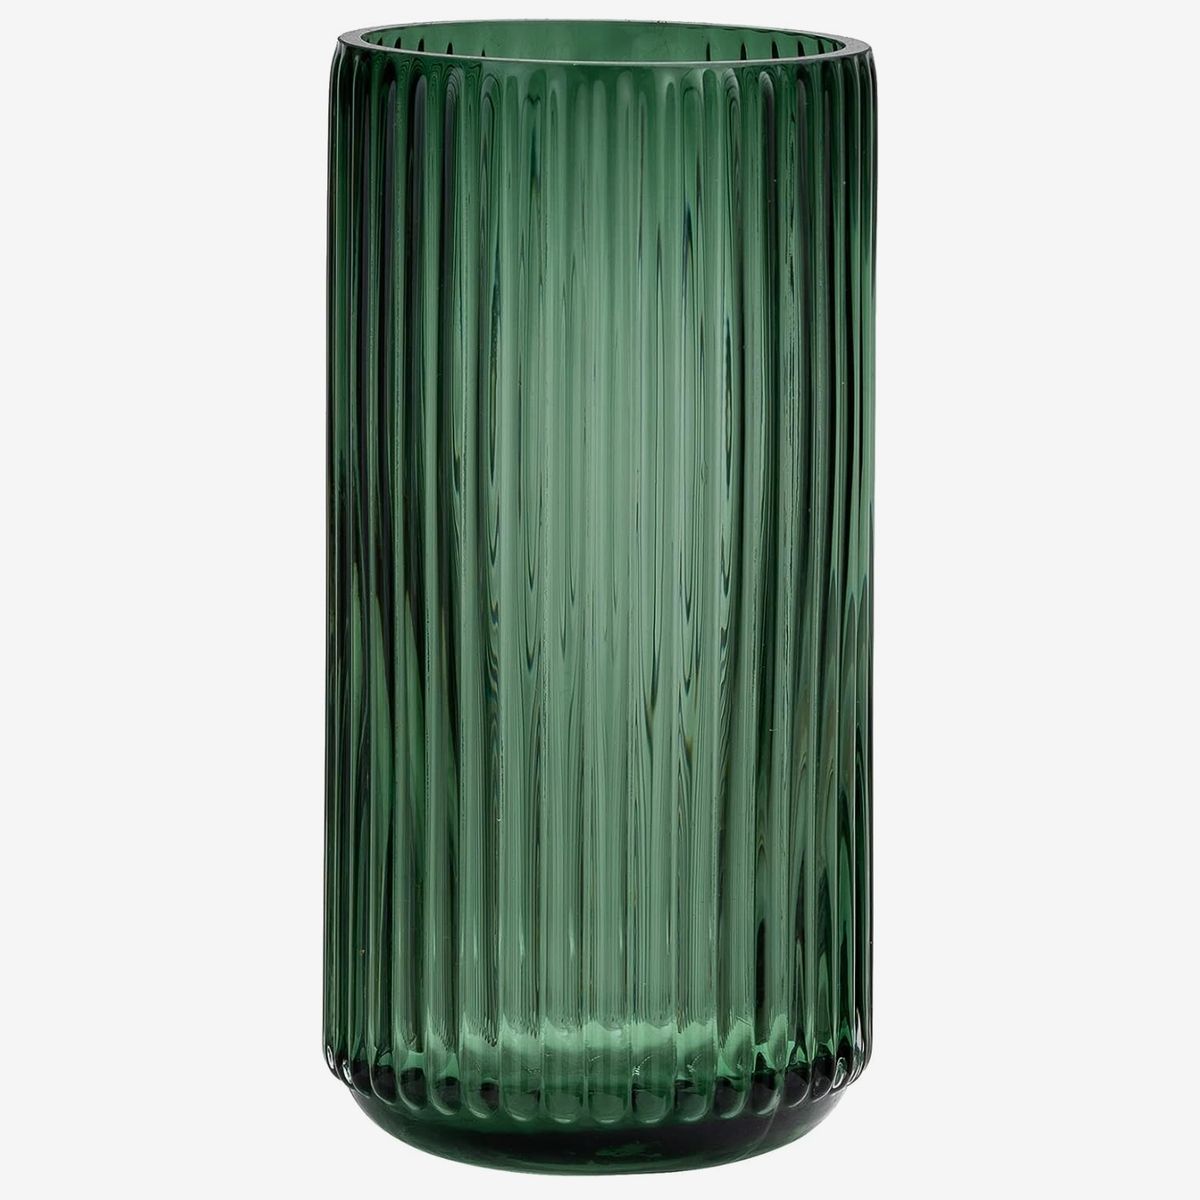 TIMEFOTO Green Thickened Glass Flower Vase